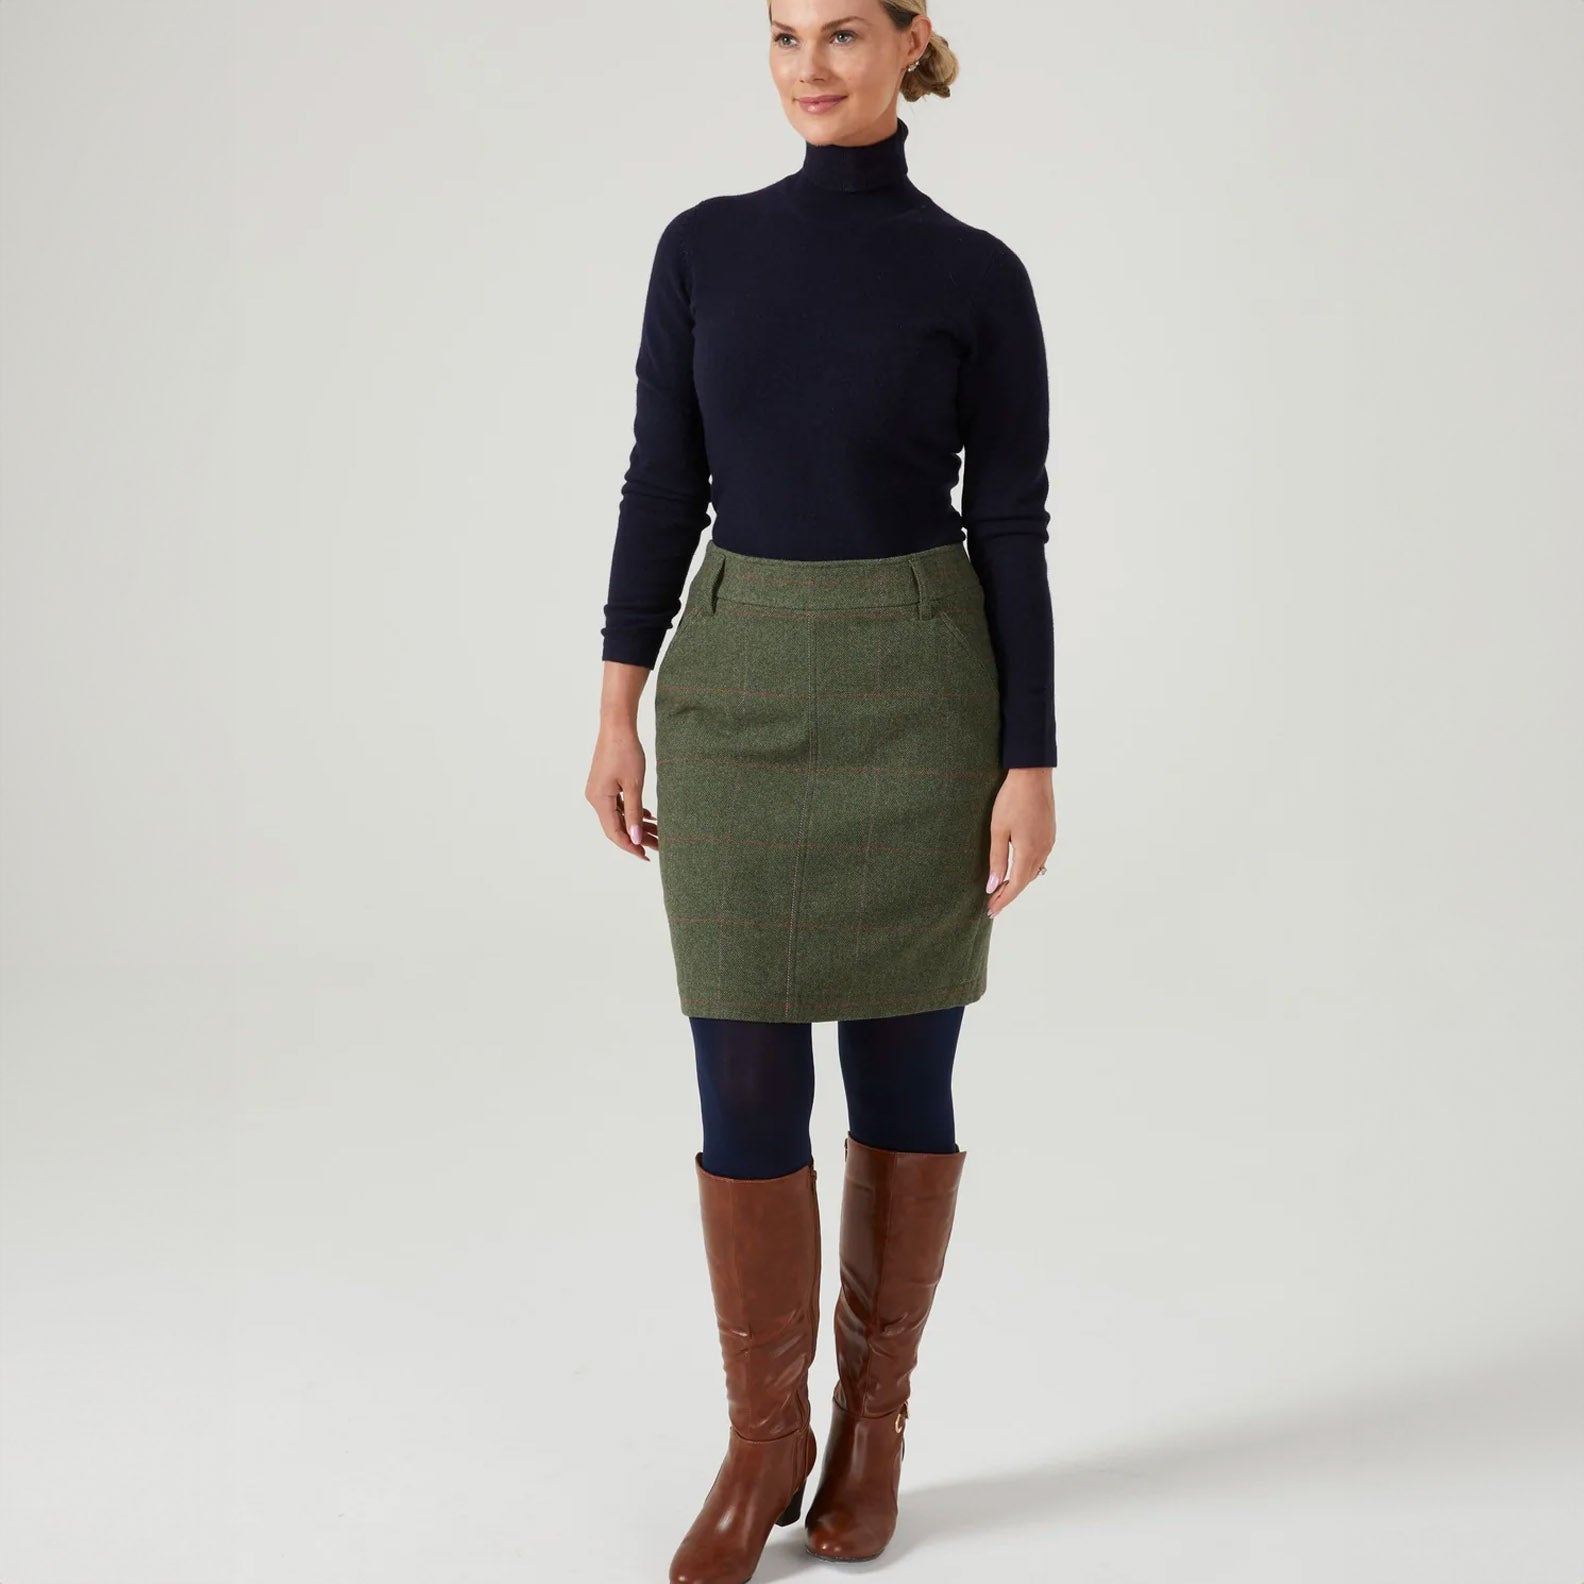 Alan Paine Combrook Ladies Tweed Skirt 49cm